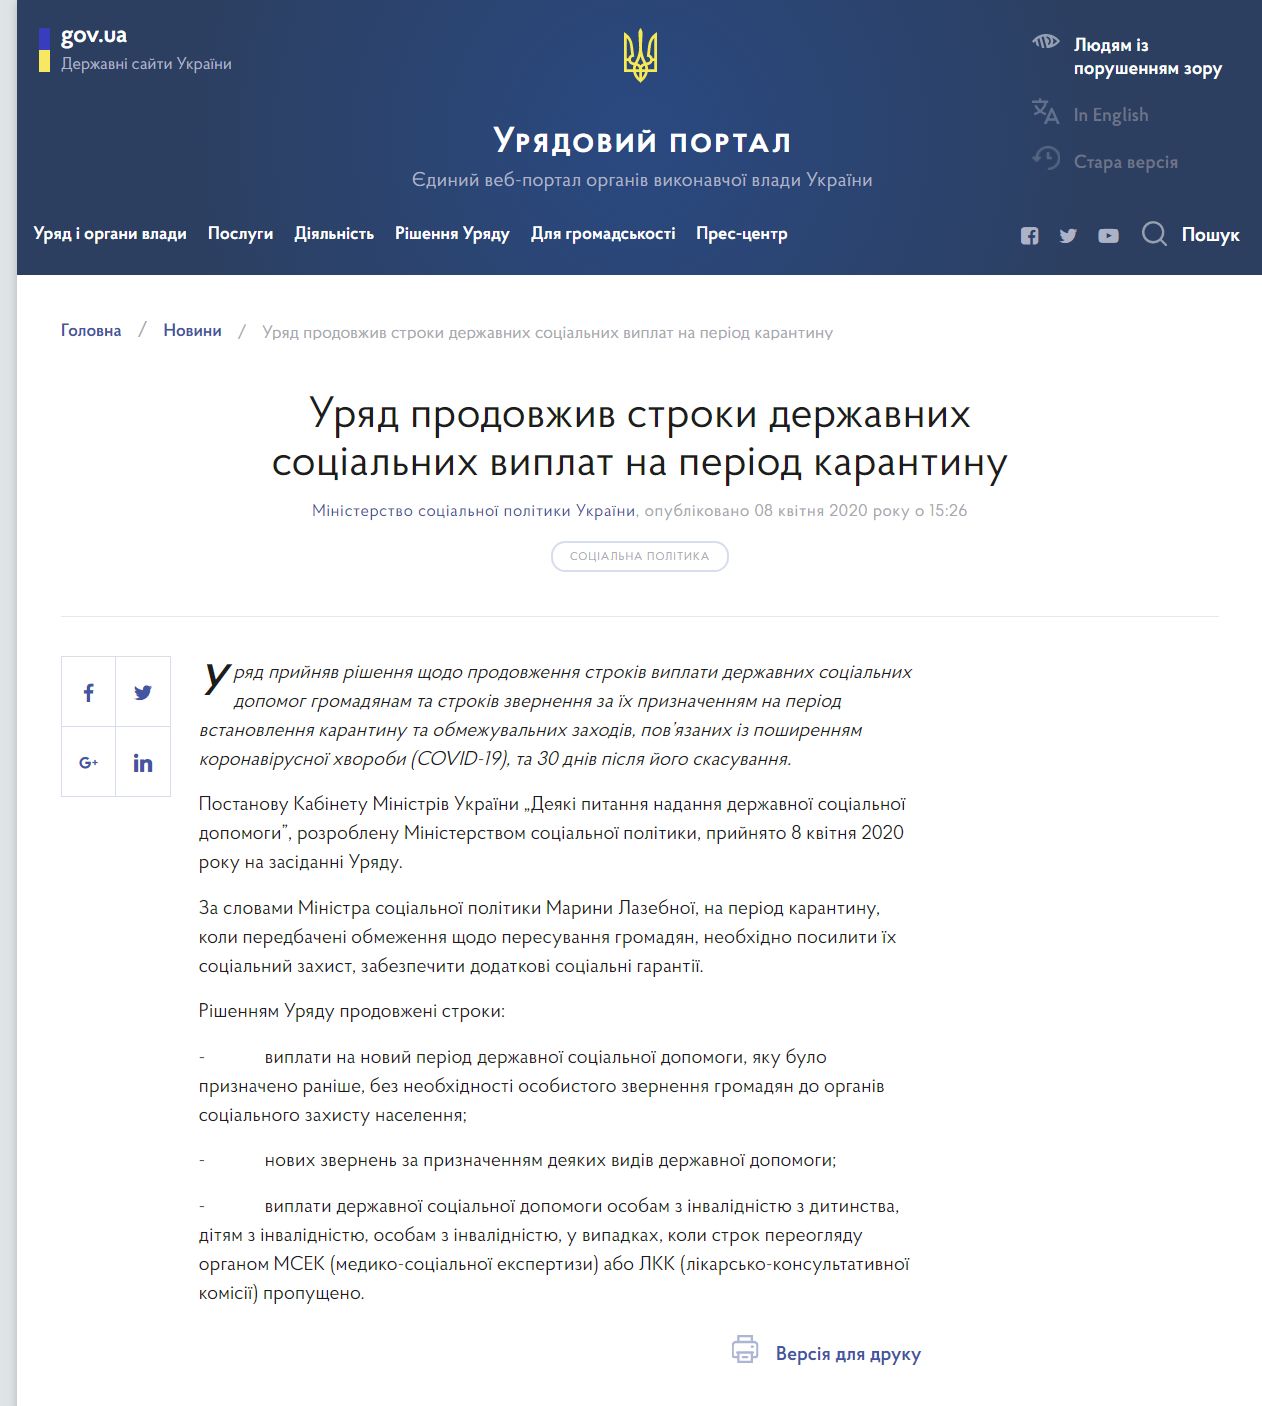 https://www.kmu.gov.ua/news/uryad-prodovzhiv-stroki-derzhavnih-socialnih-viplat-na-period-karantinu